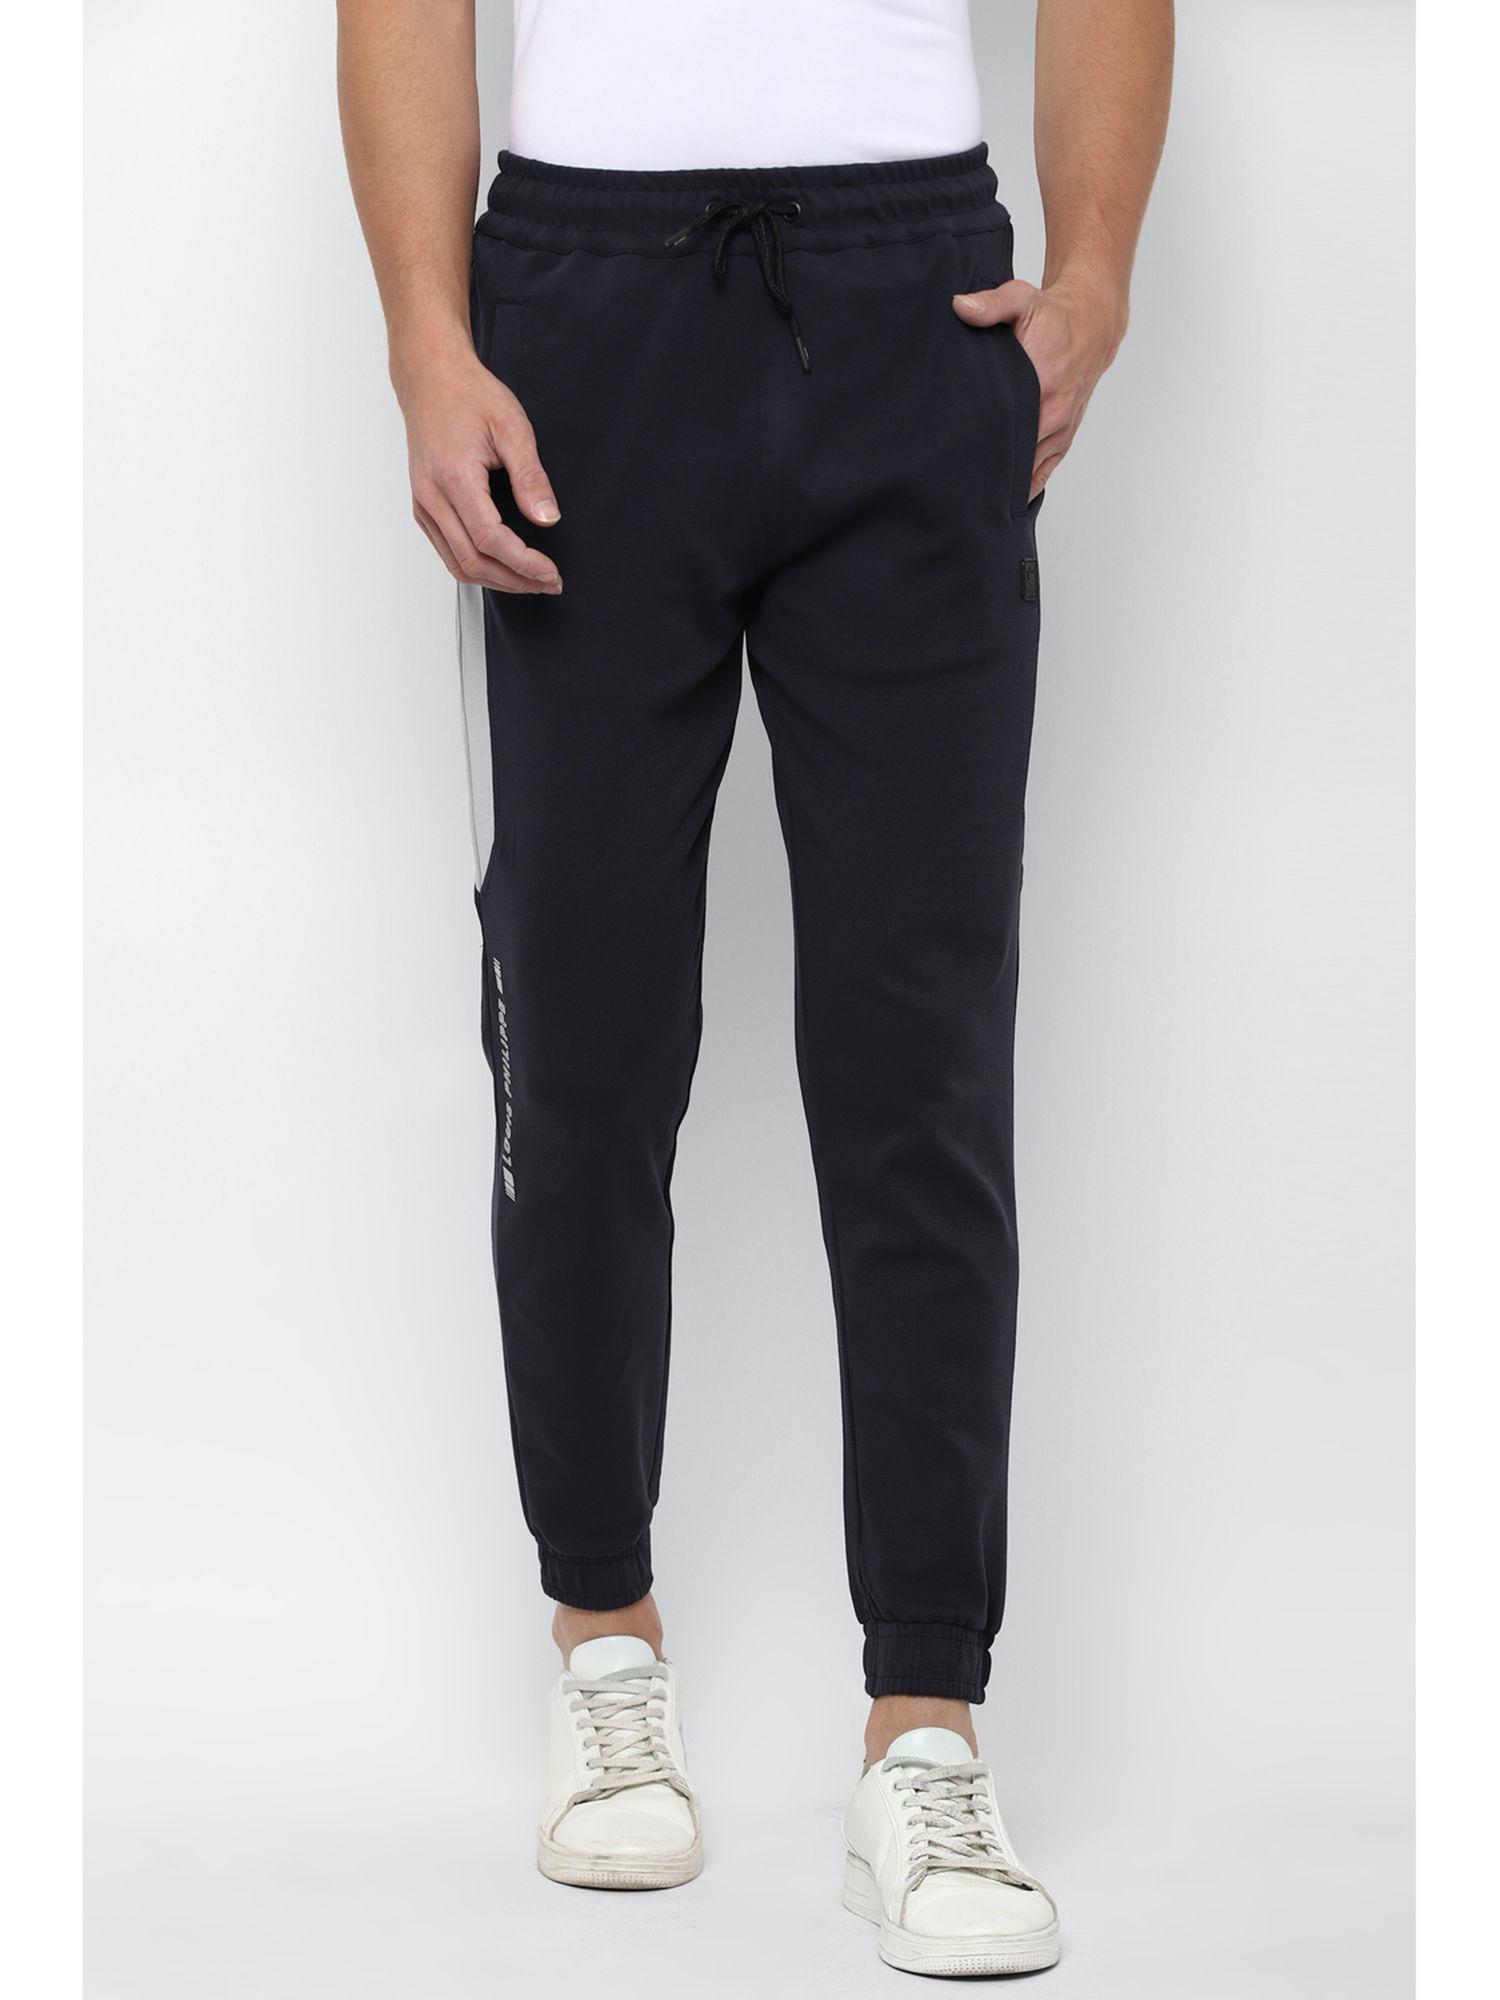 navy-jogger-pants